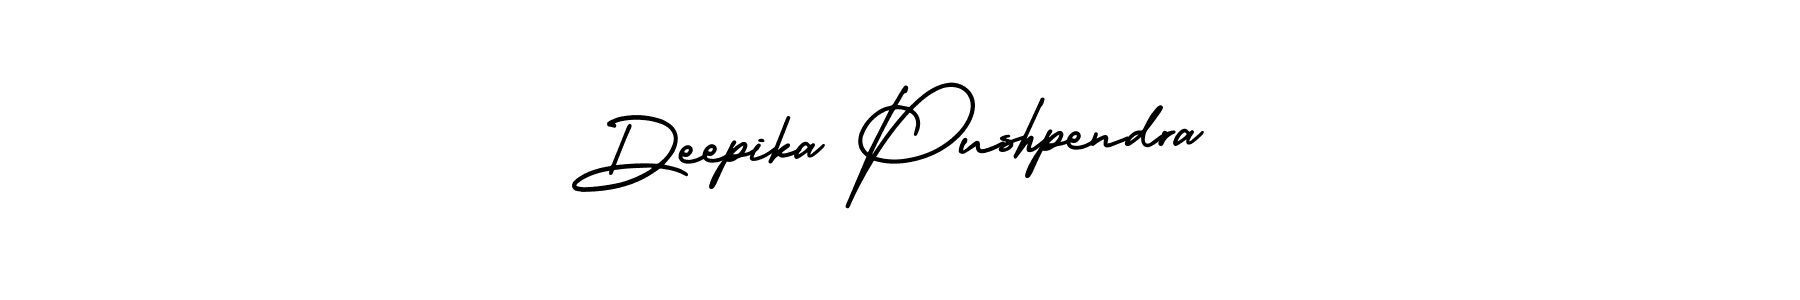 How to Draw Deepika Pushpendra signature style? AmerikaSignatureDemo-Regular is a latest design signature styles for name Deepika Pushpendra. Deepika Pushpendra signature style 3 images and pictures png